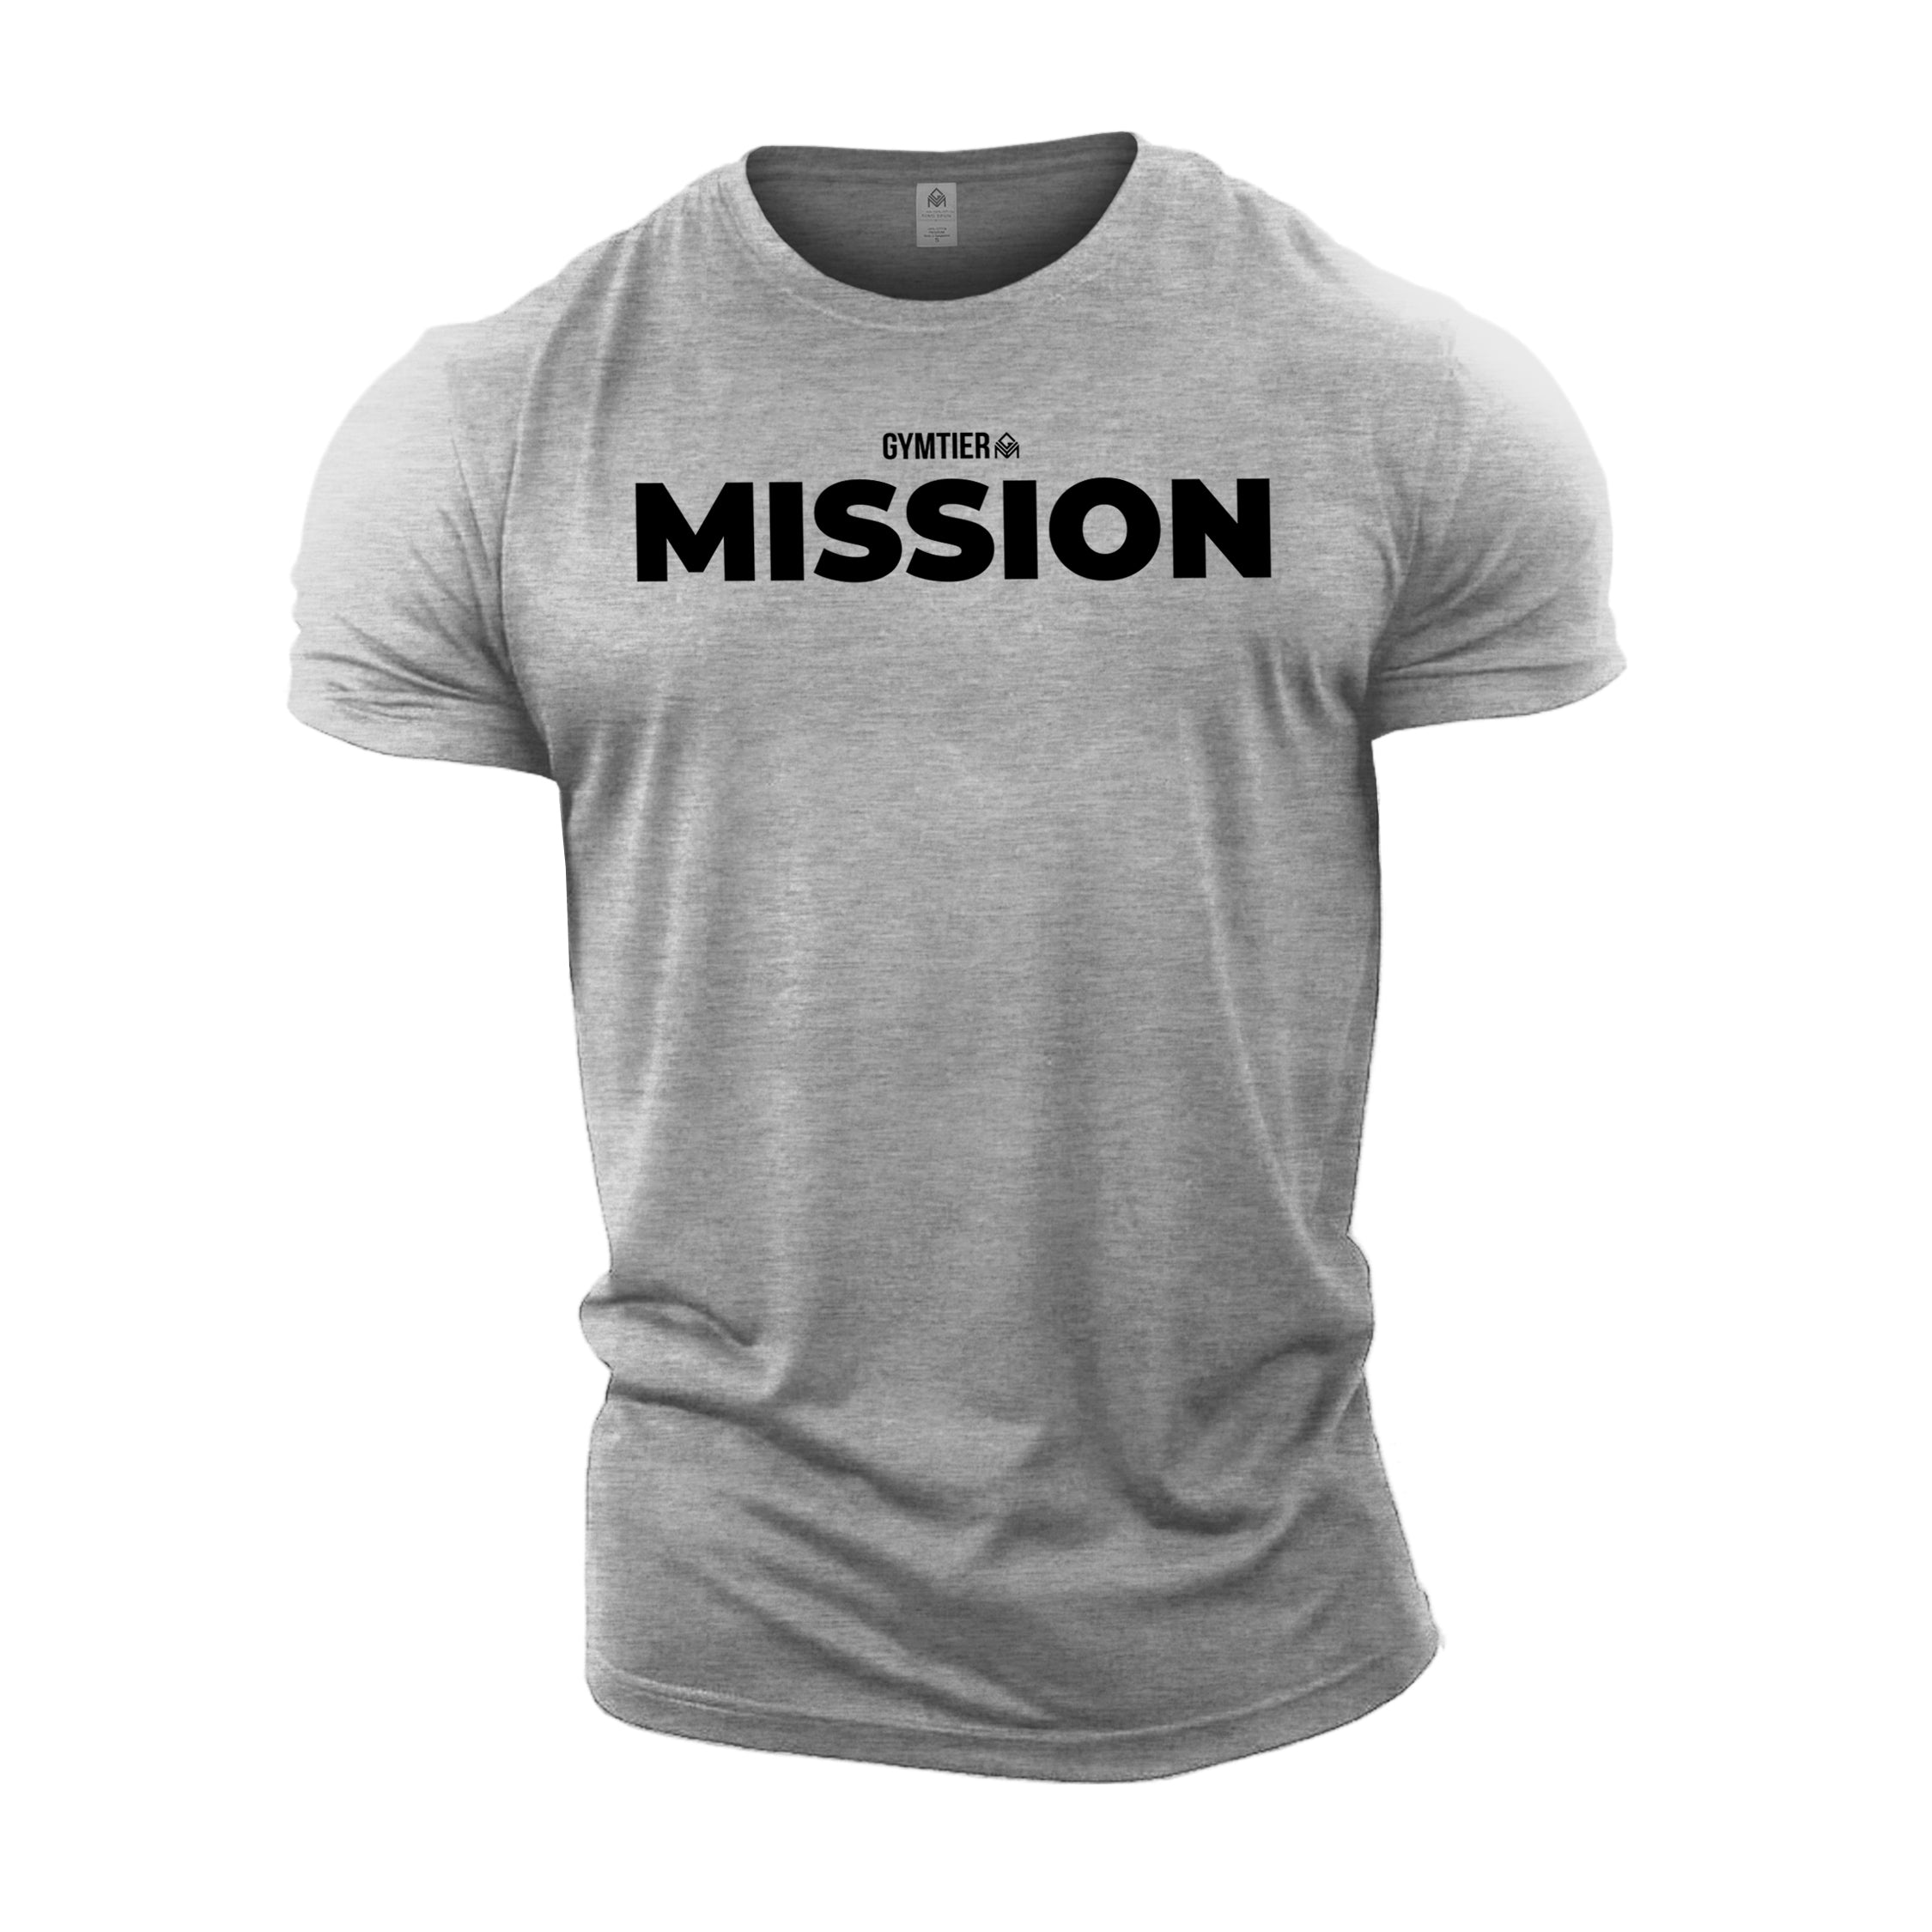 GYMTIER Mission T-Shirt